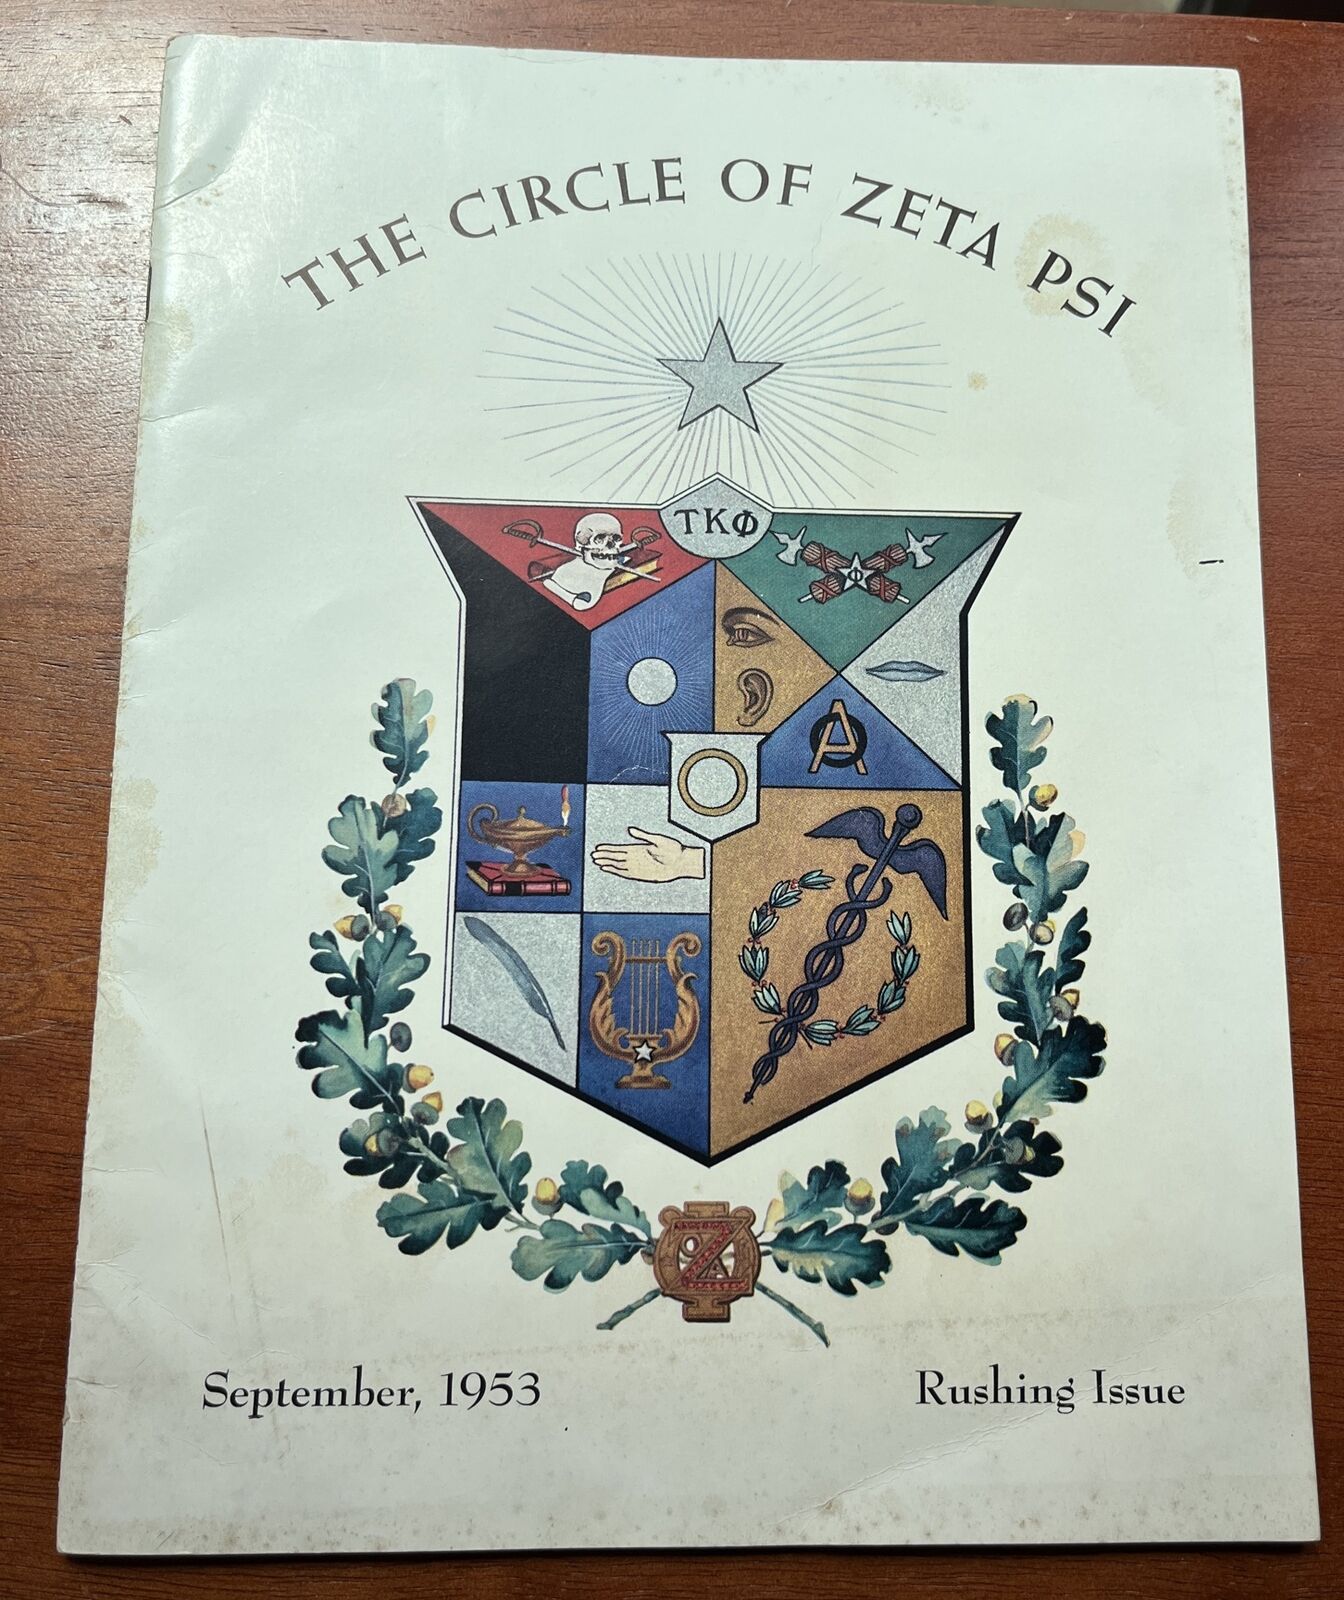 The Circle of Zeta Psi, September 1953 Rushing Issue